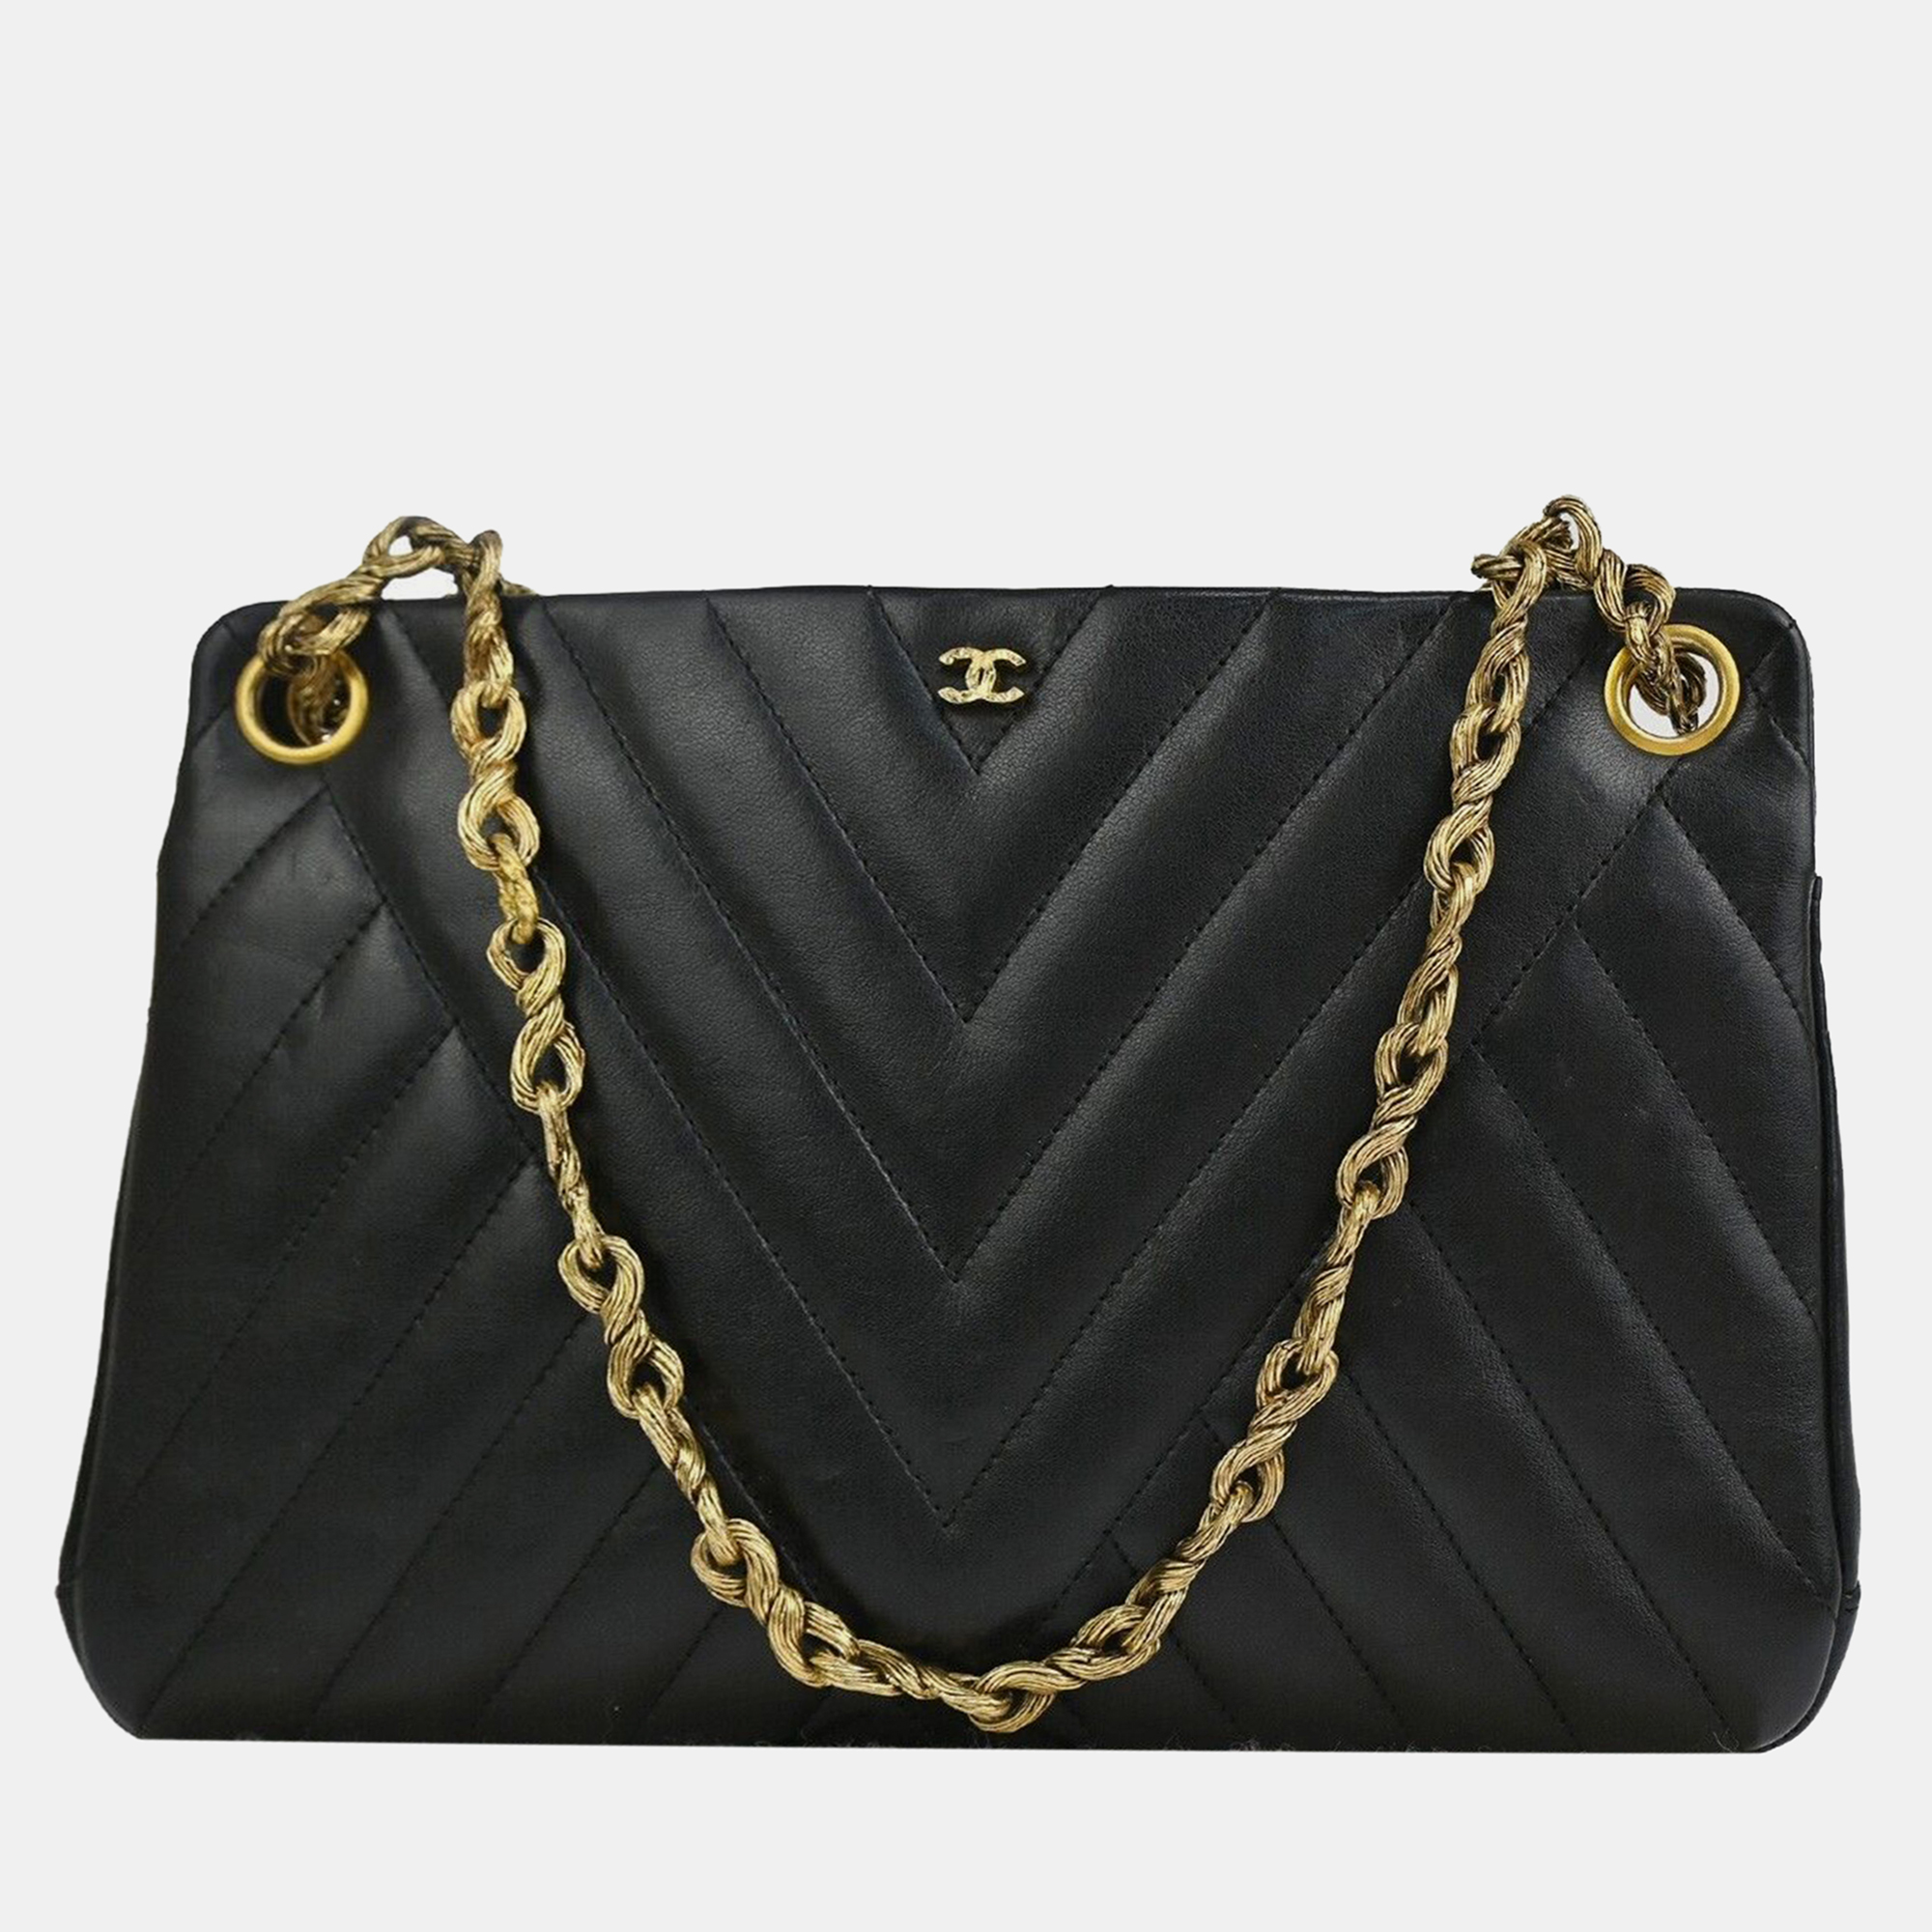 Chanel black leather chevron handbag